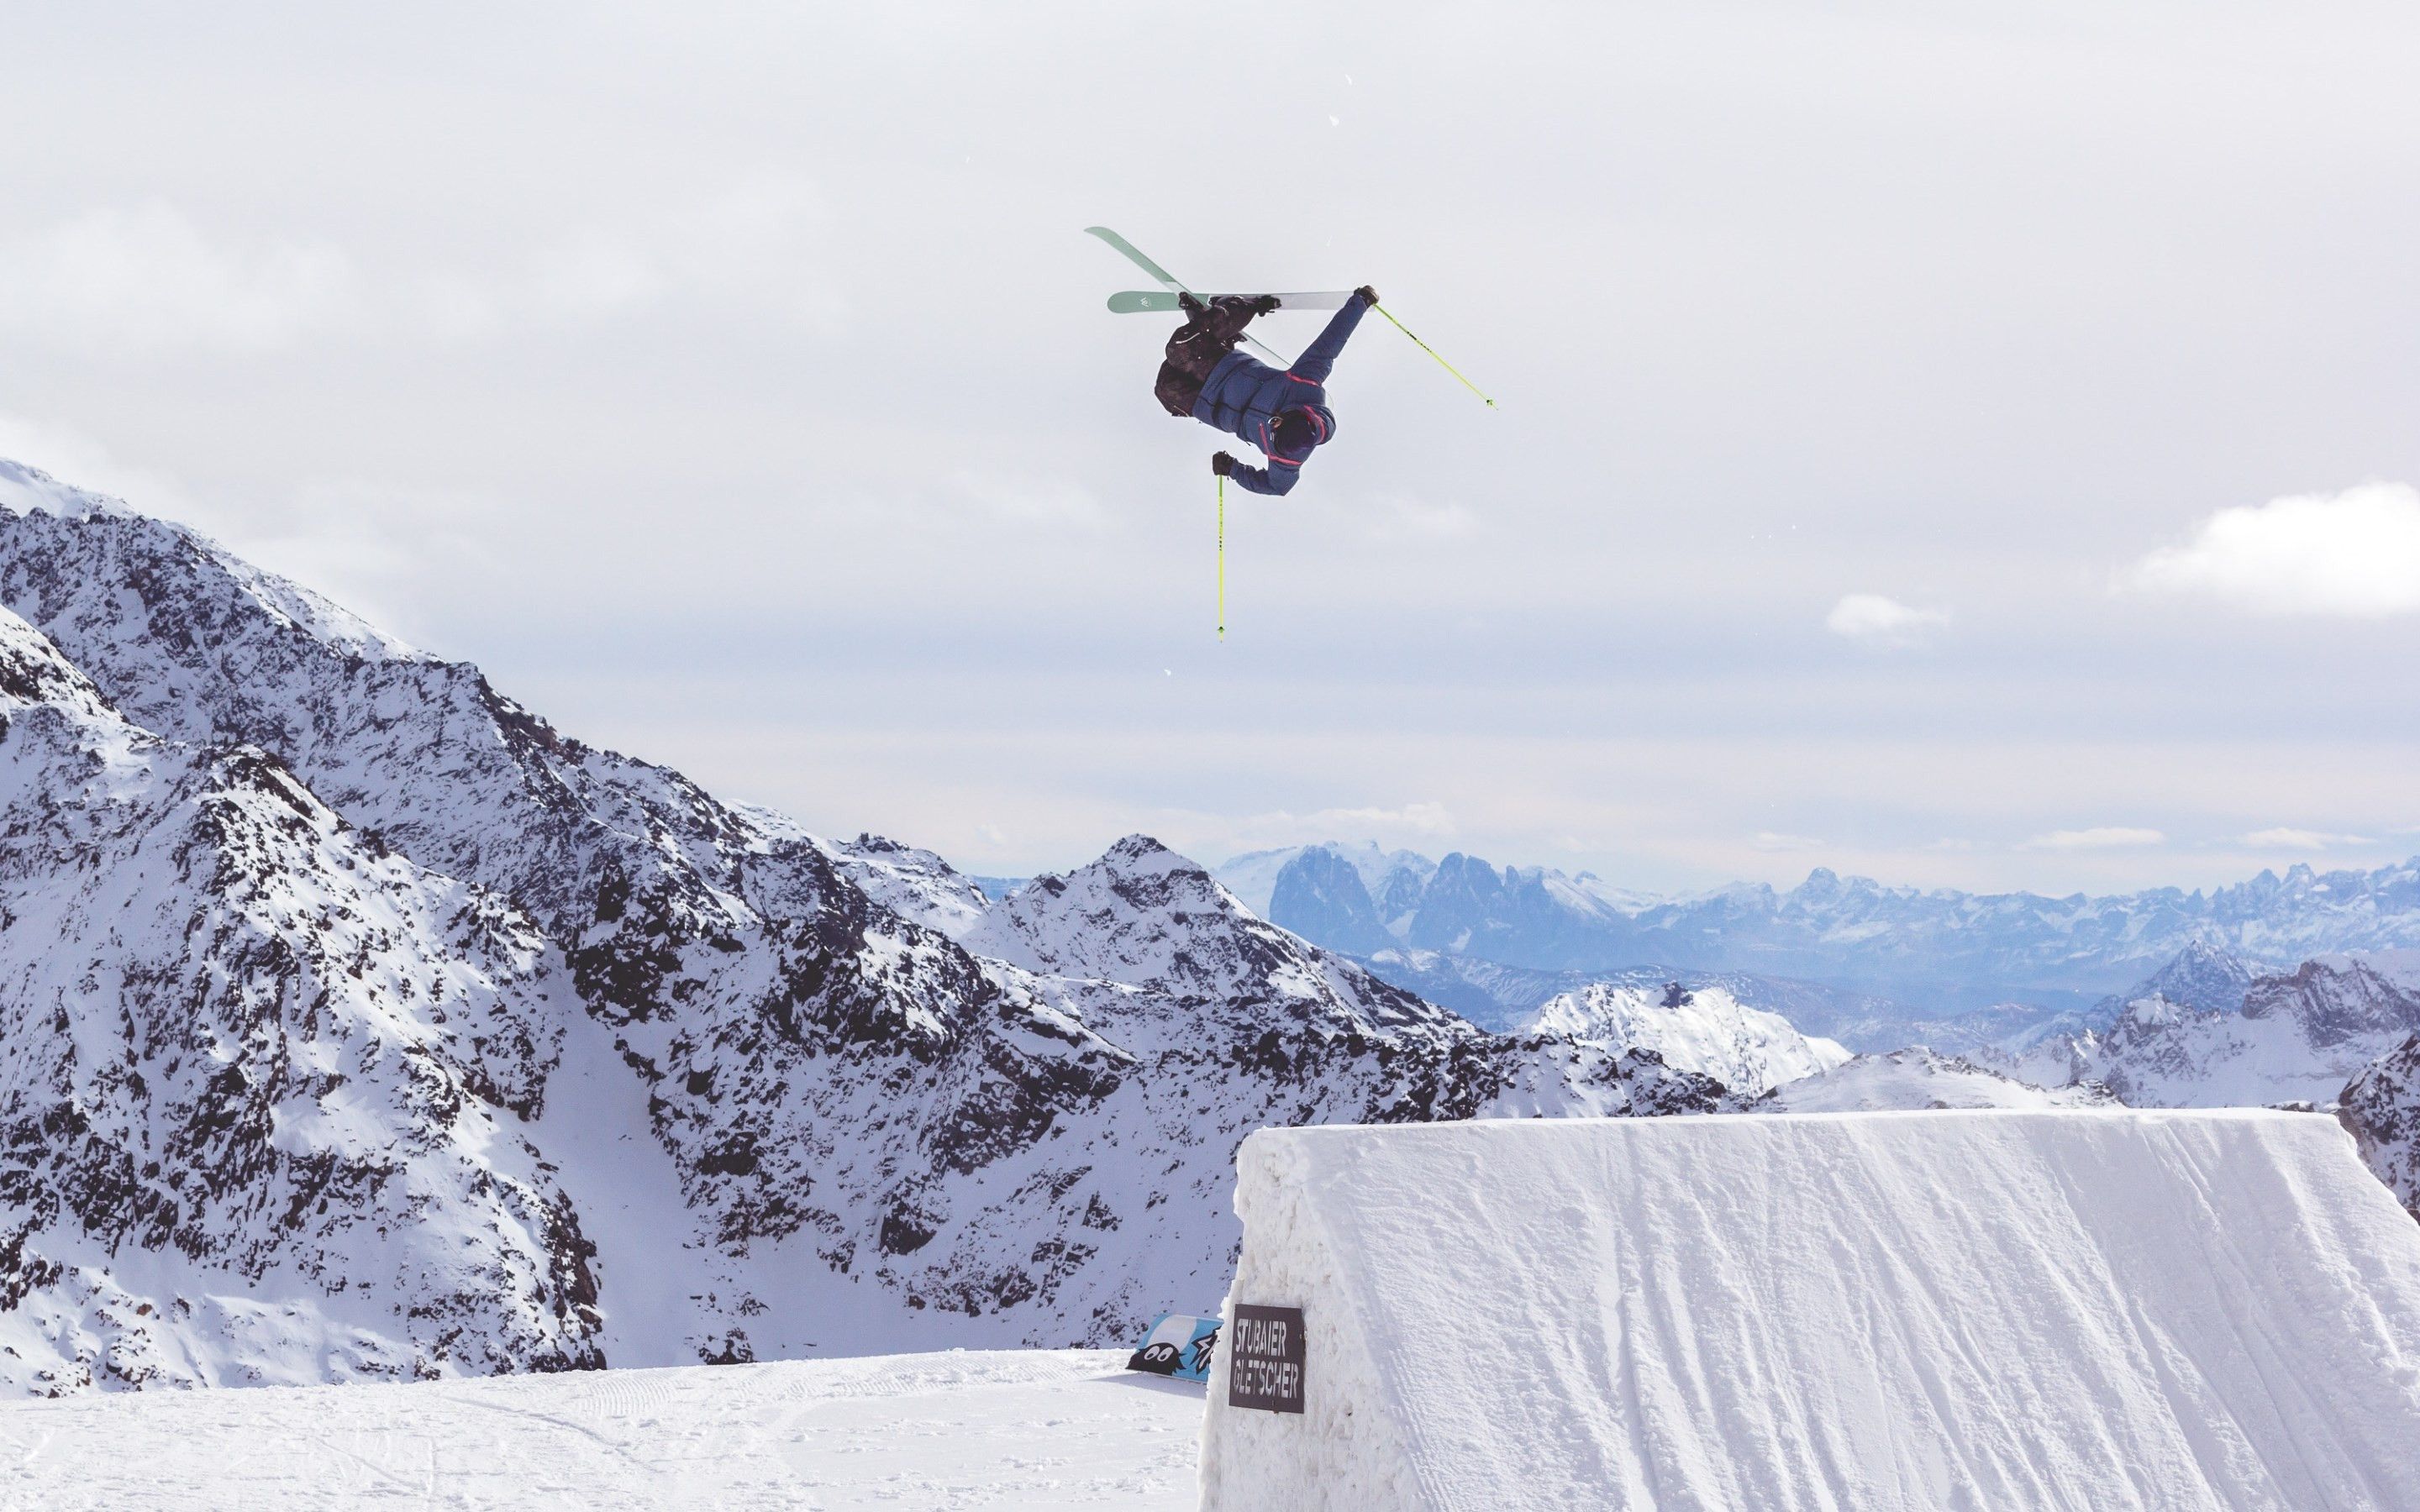 Download wallpaper: Acrobatic skiing 2880x1800